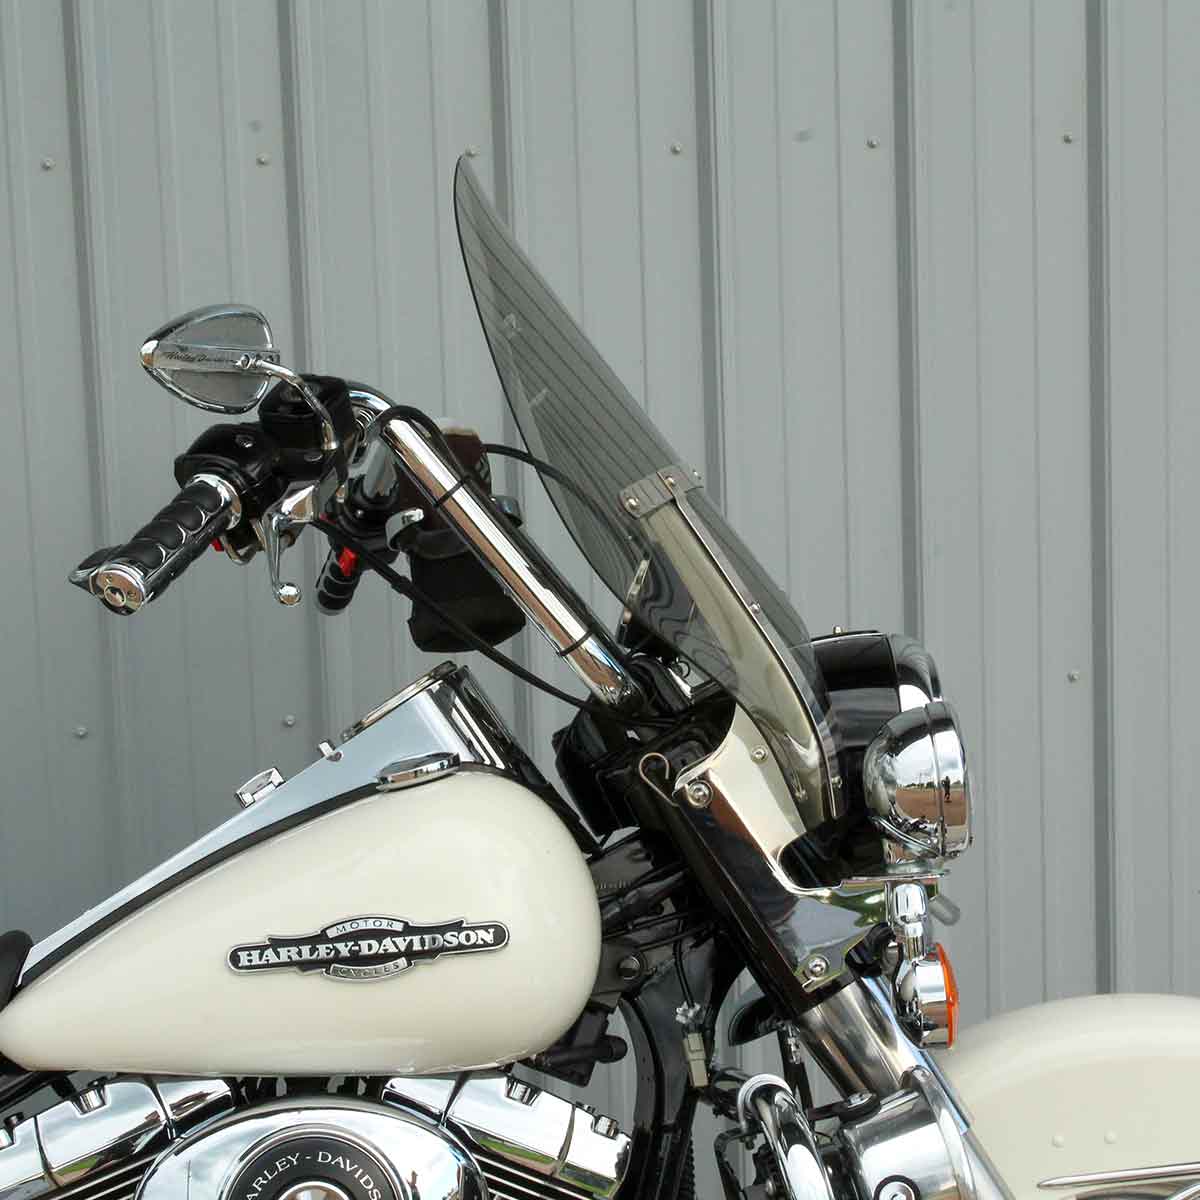 16.5" Tint Billboard Flare™ Windshield for Harley-Davidson® Road King motorcycle models